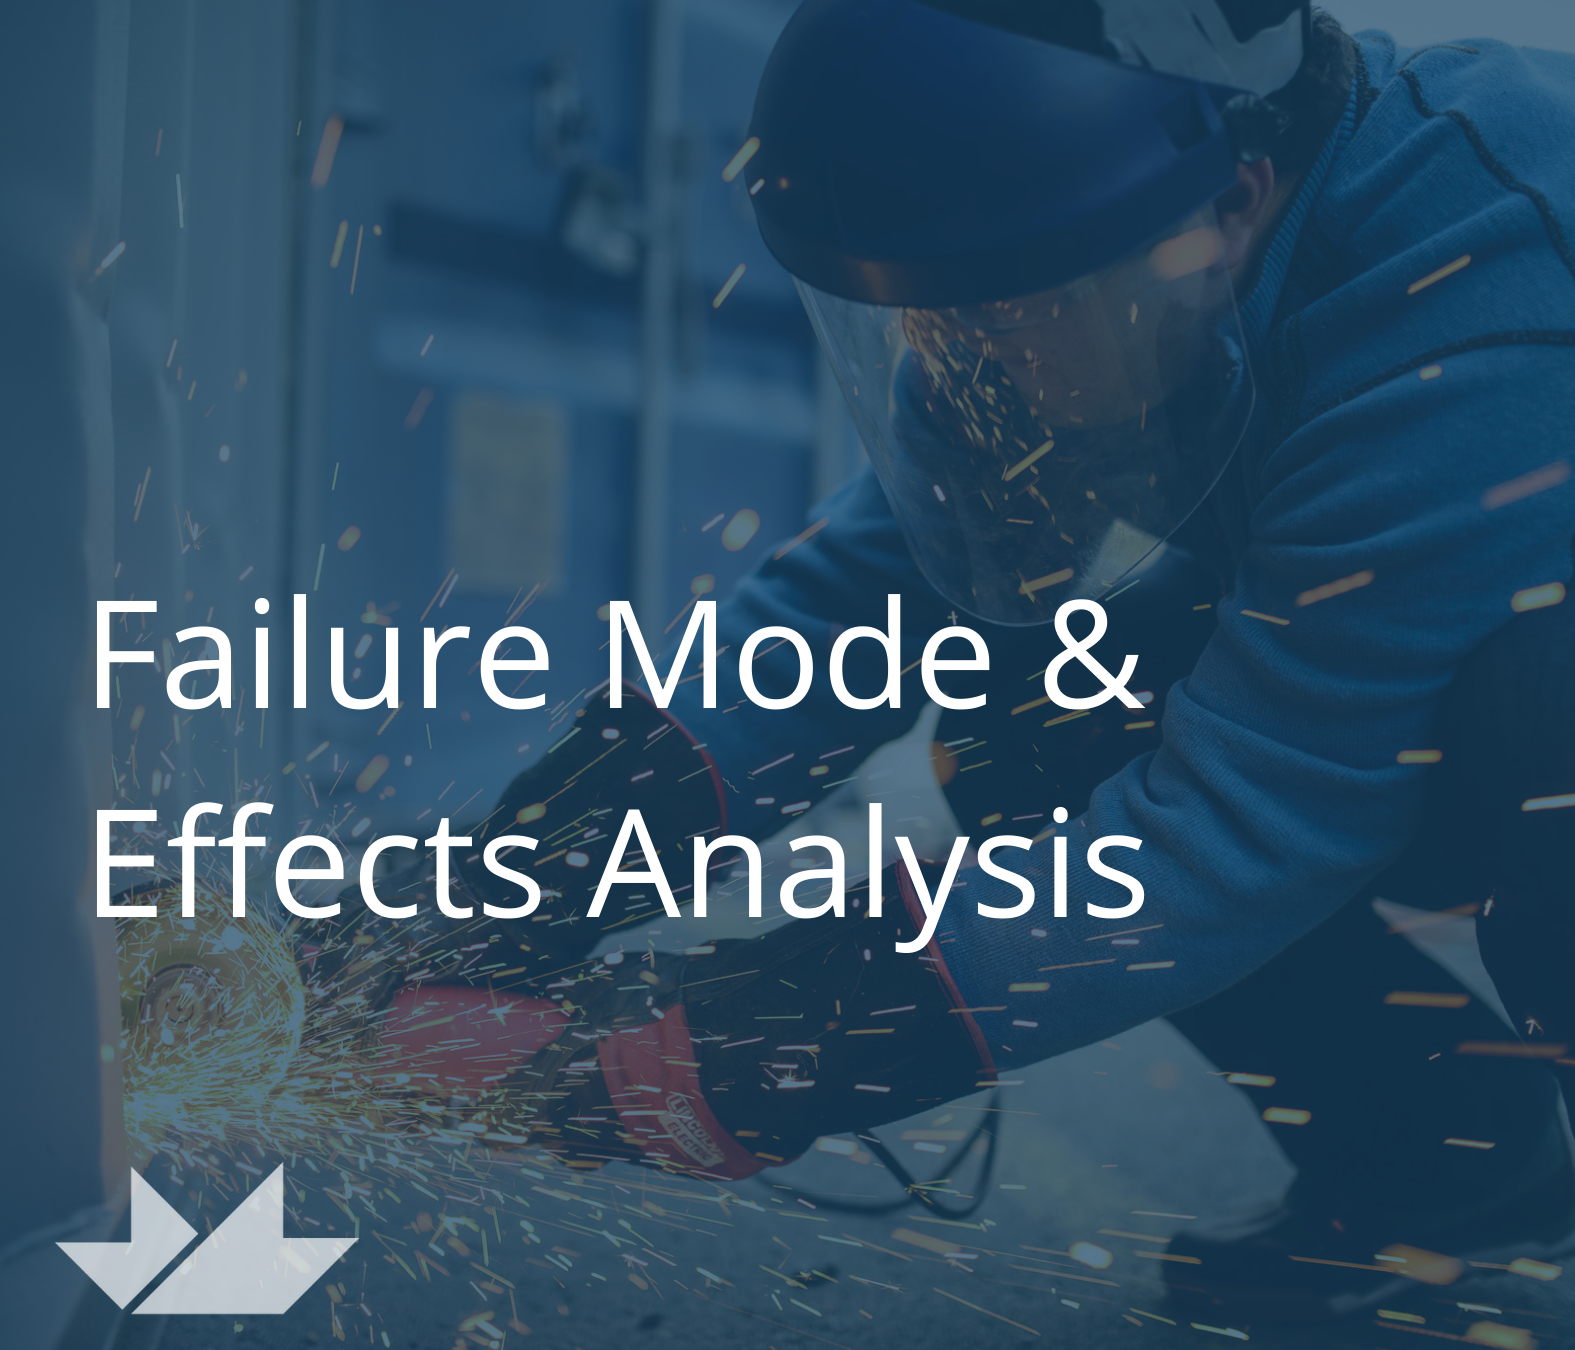 Failure Mode & Effects Analysis